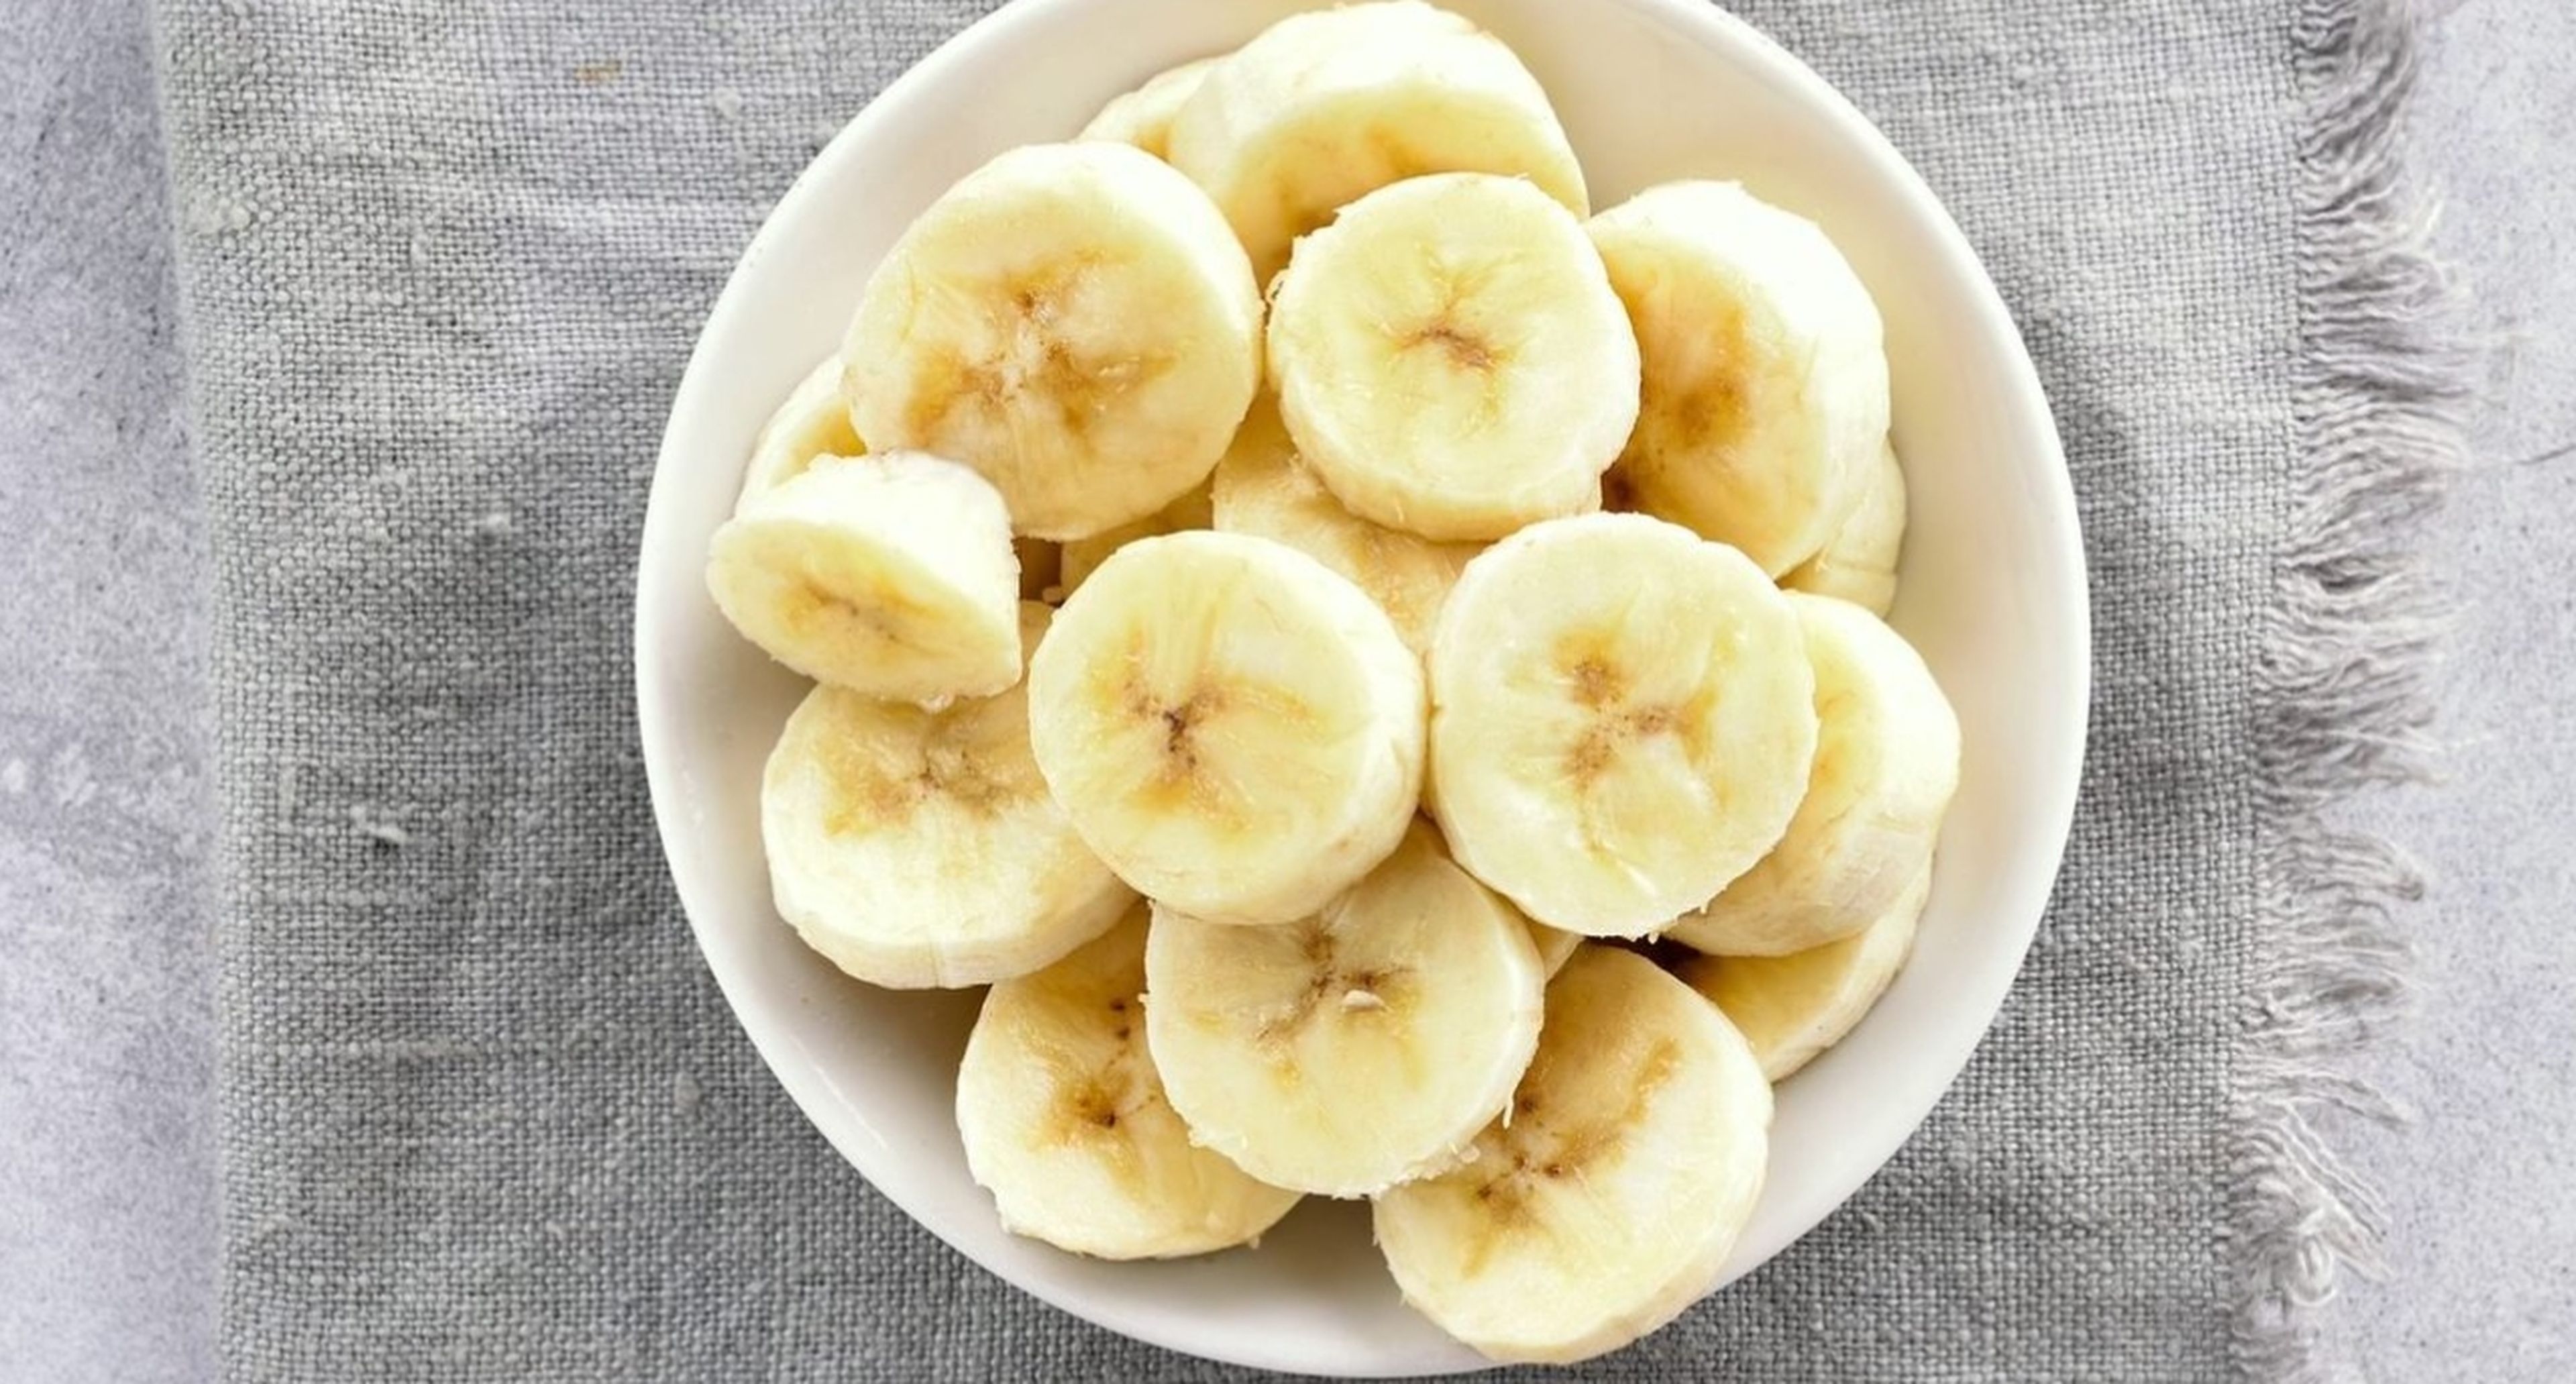 Banana's mashed